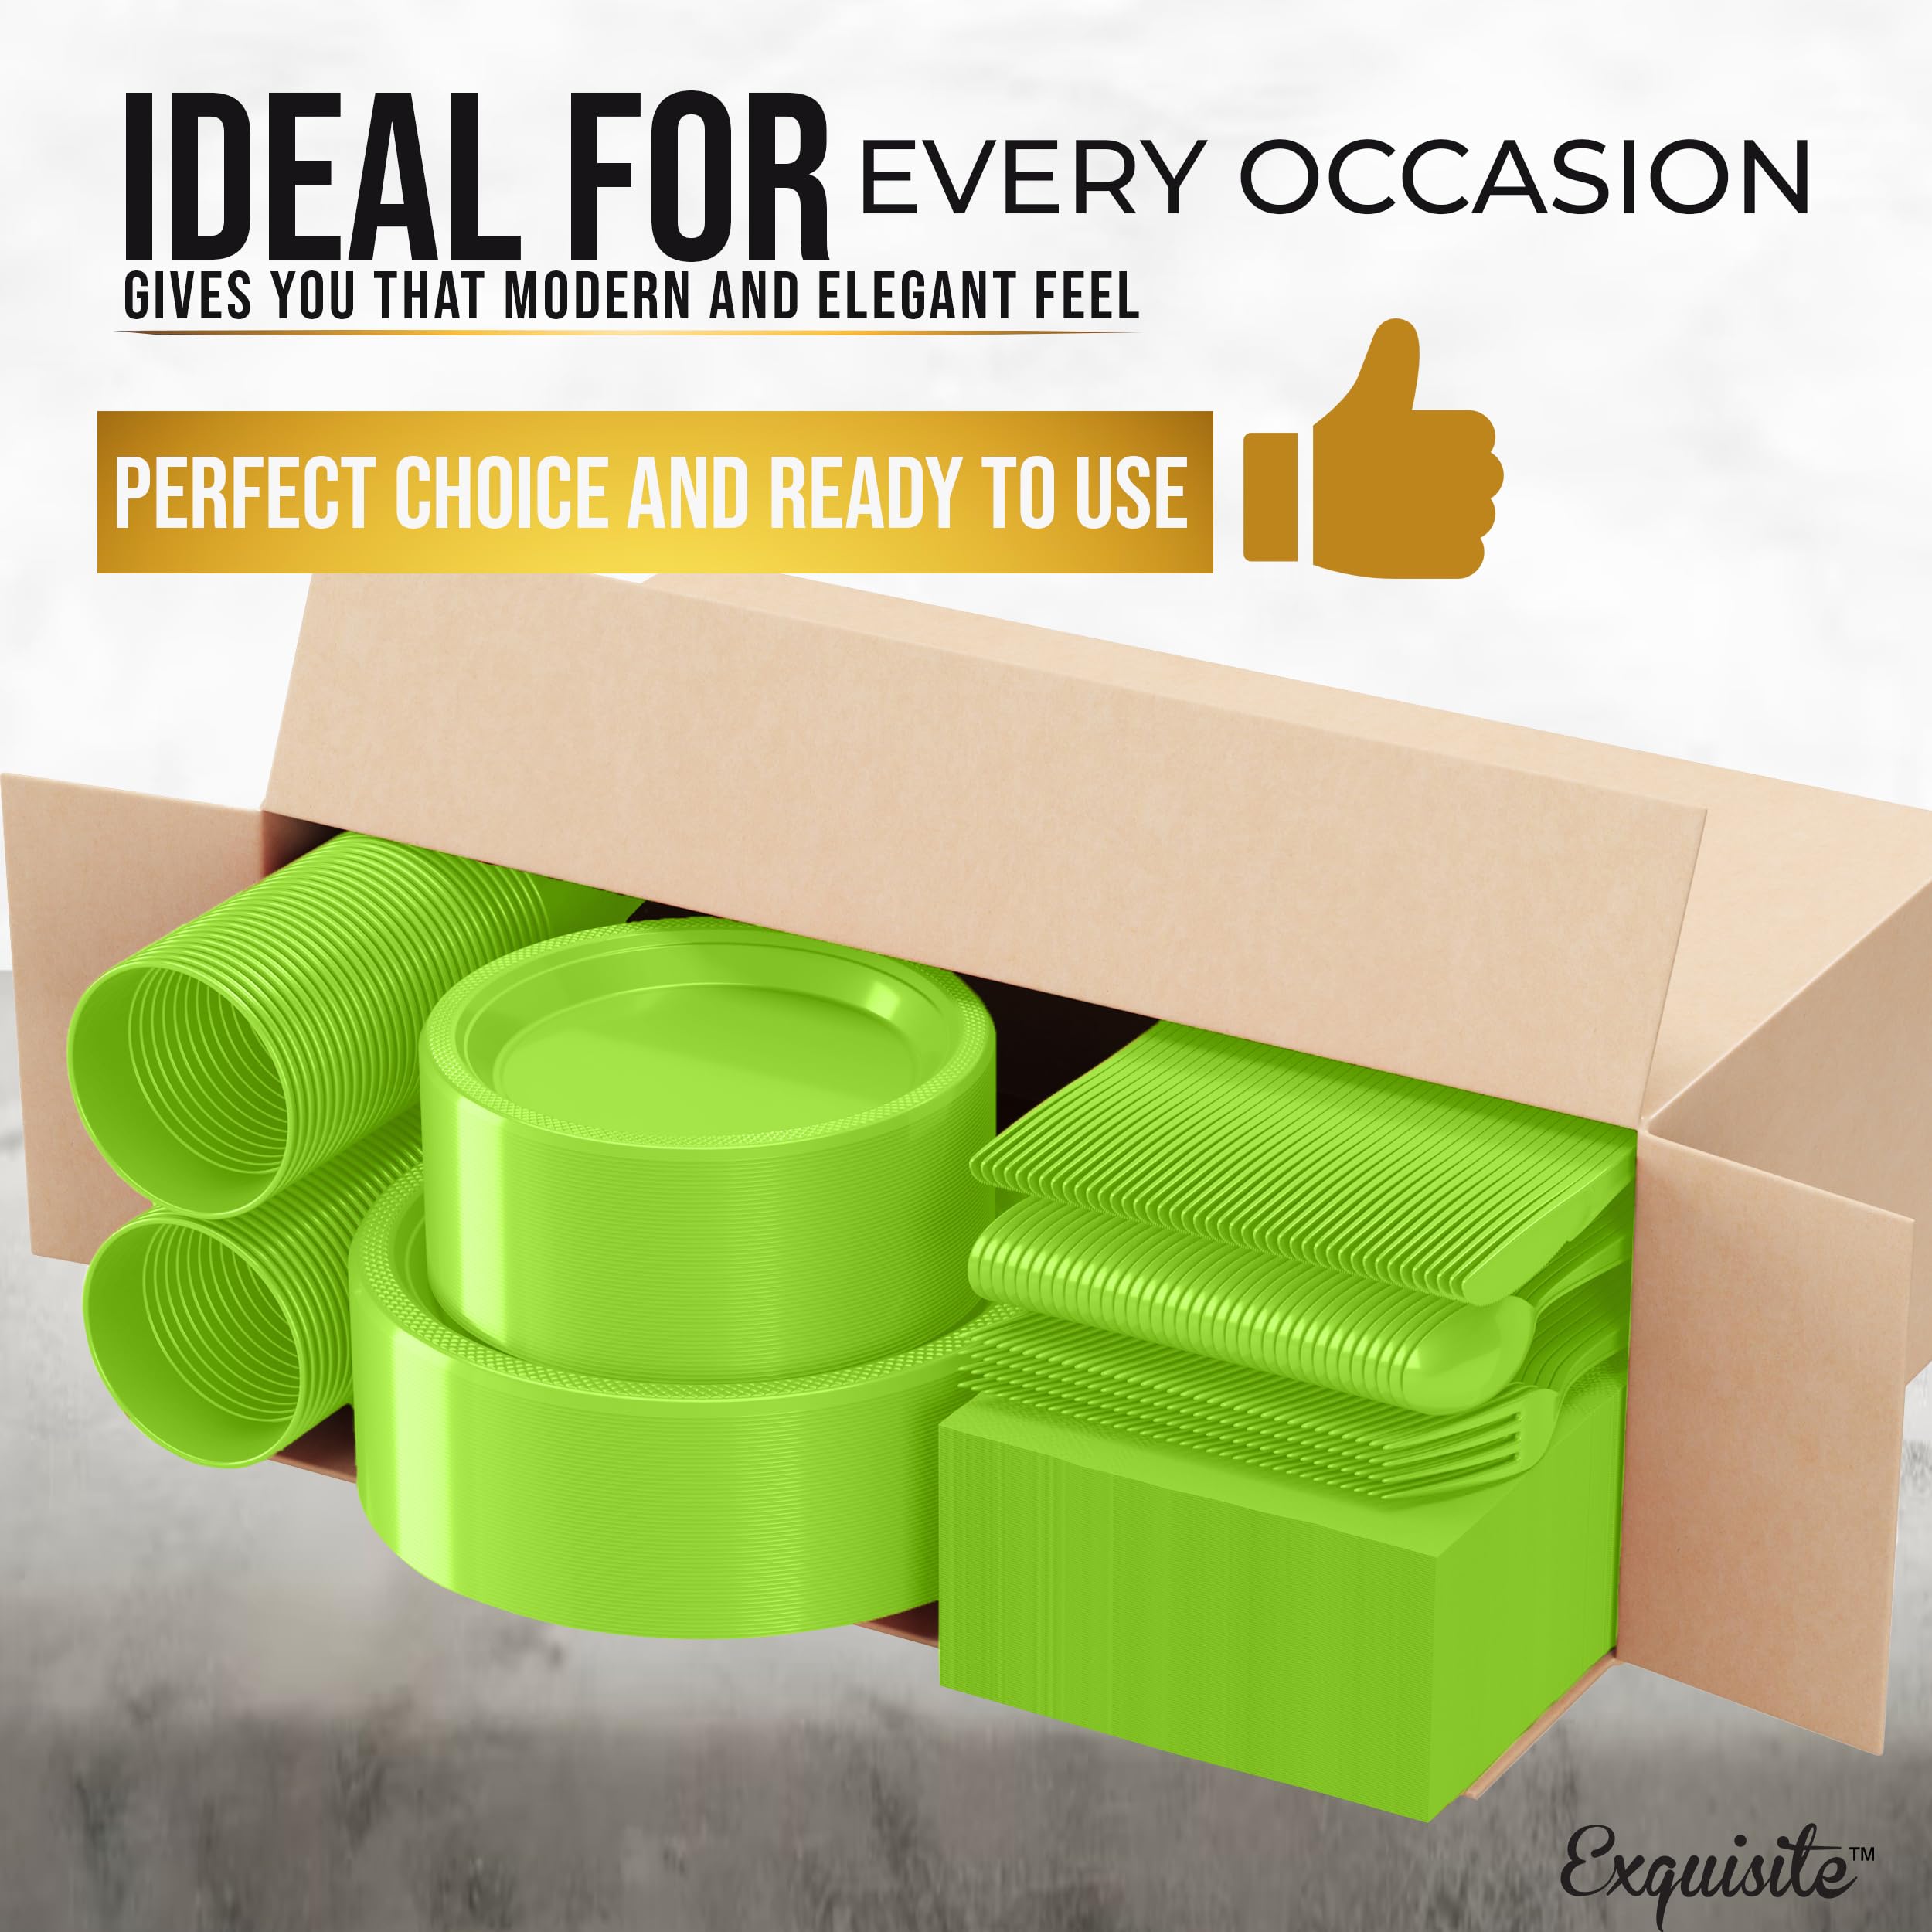 350 Pcs Lime Green Plastic Disposable Tableware Set